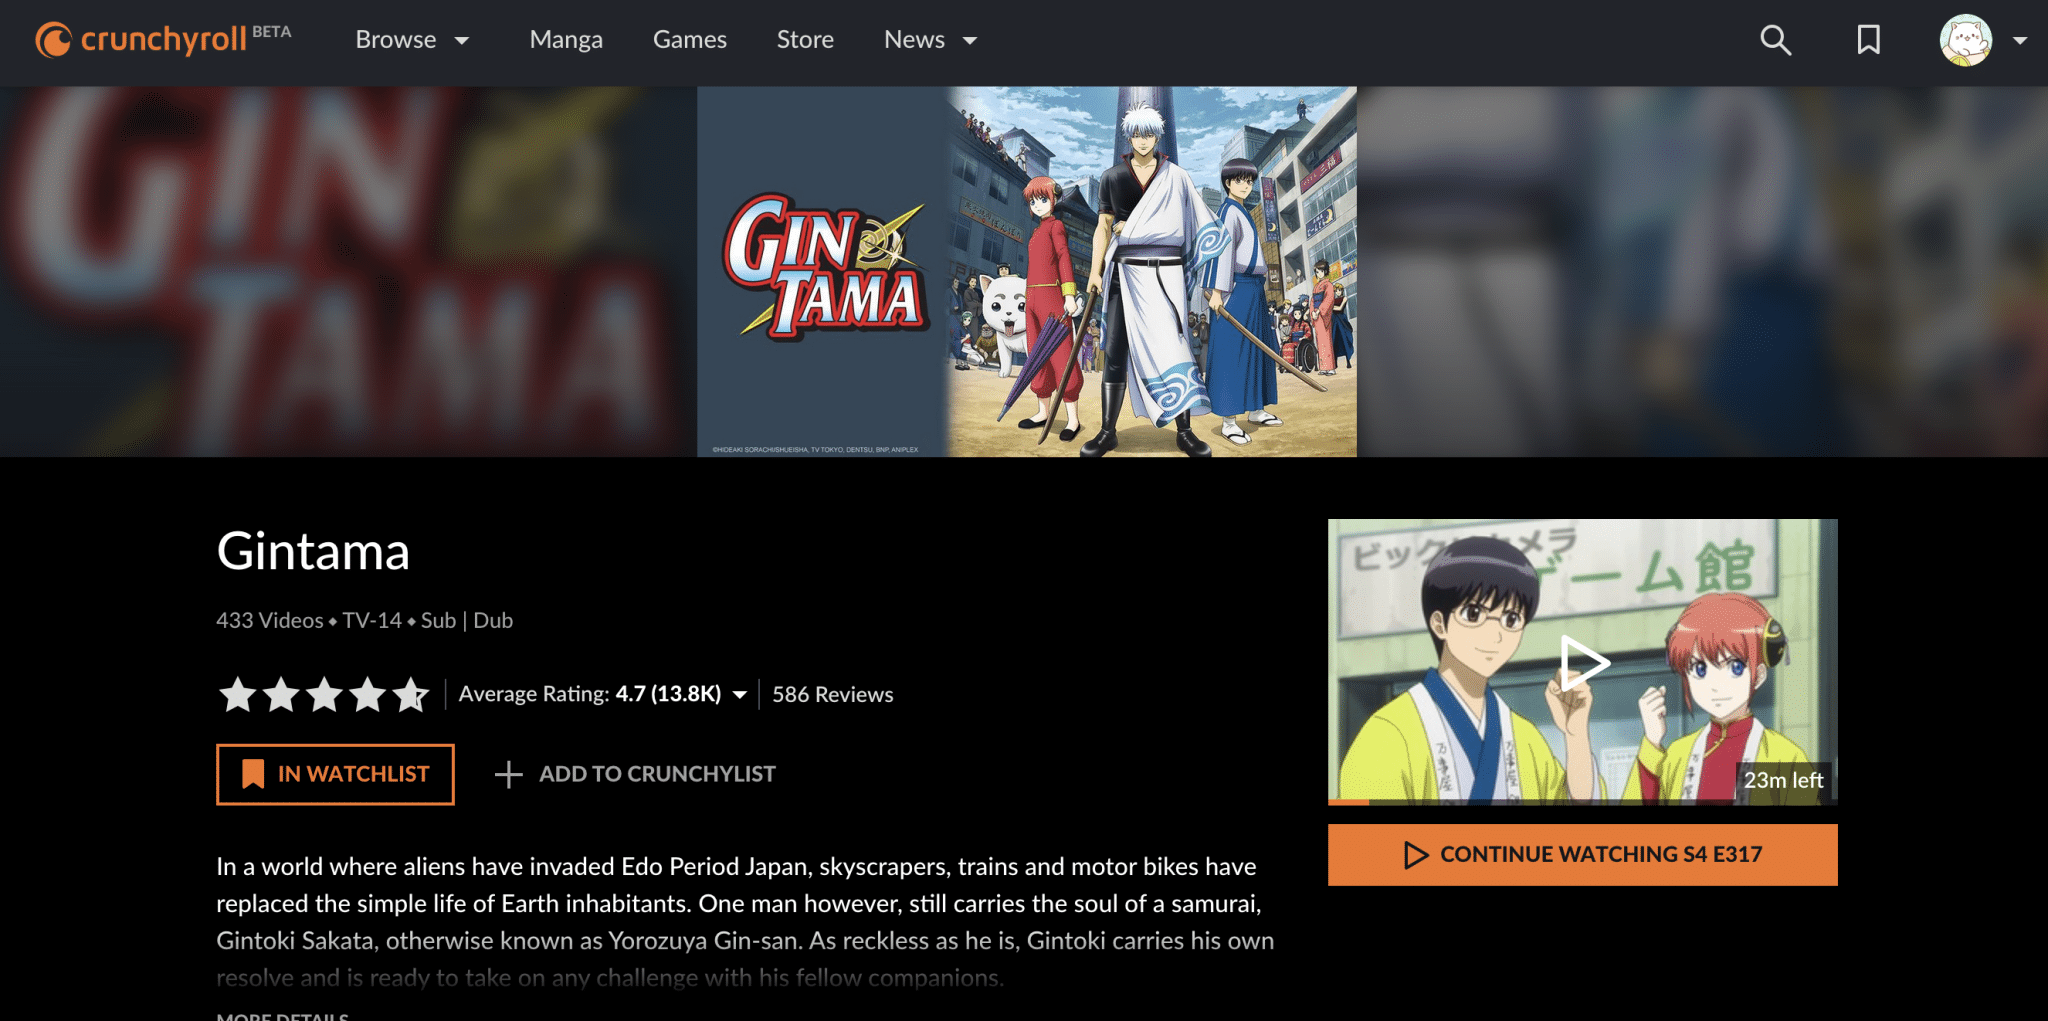 Gintama on Crunchyroll, Hideaki Sorachi / Shueisha / TV Tokyo / Dentsu / BNP / Aniplex